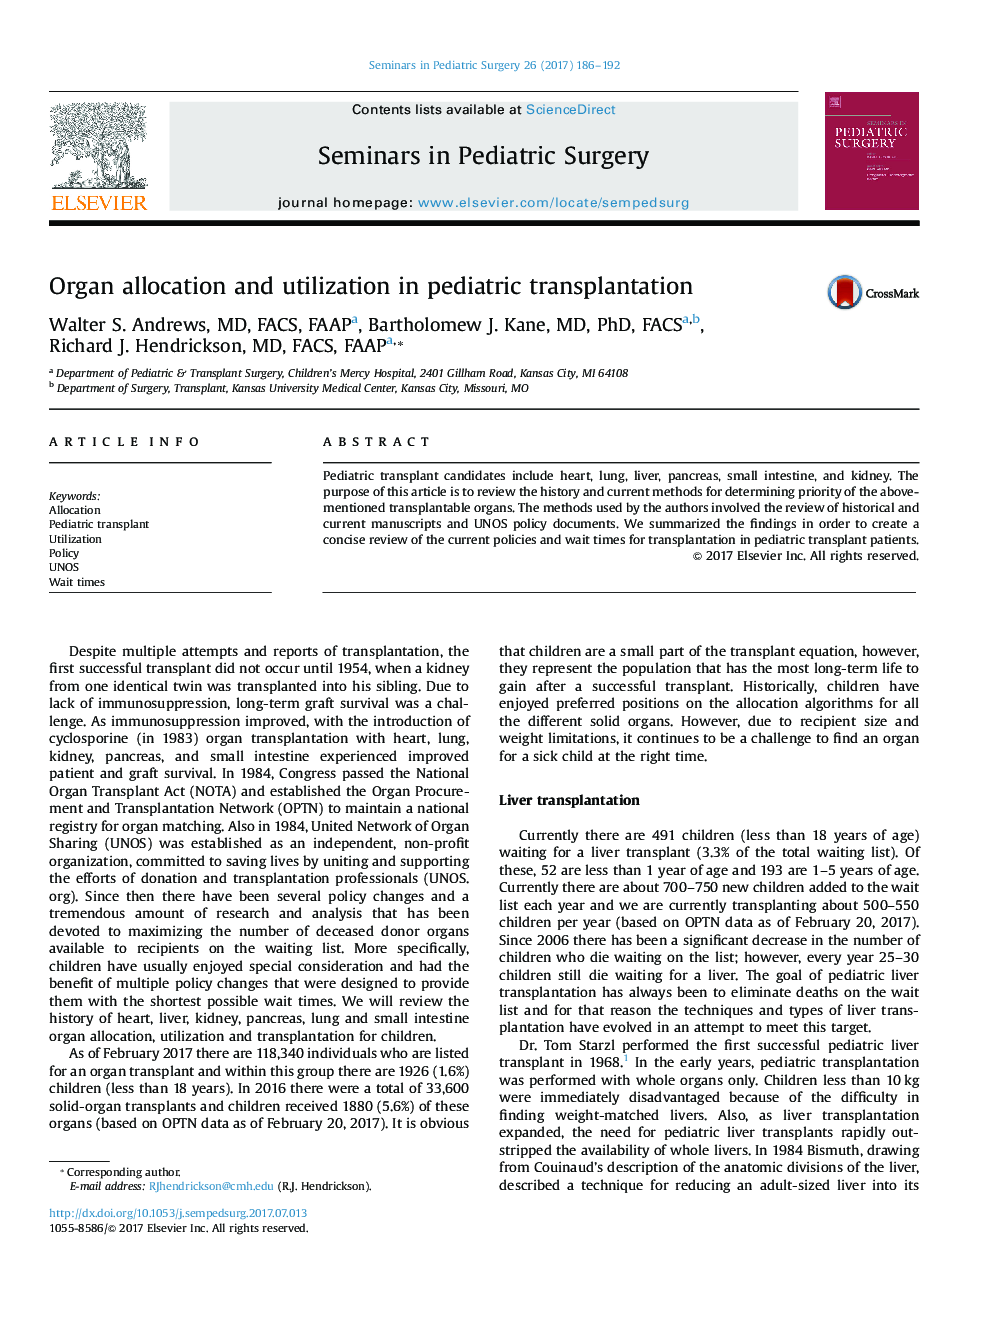 Organ allocation and utilization in pediatric transplantation